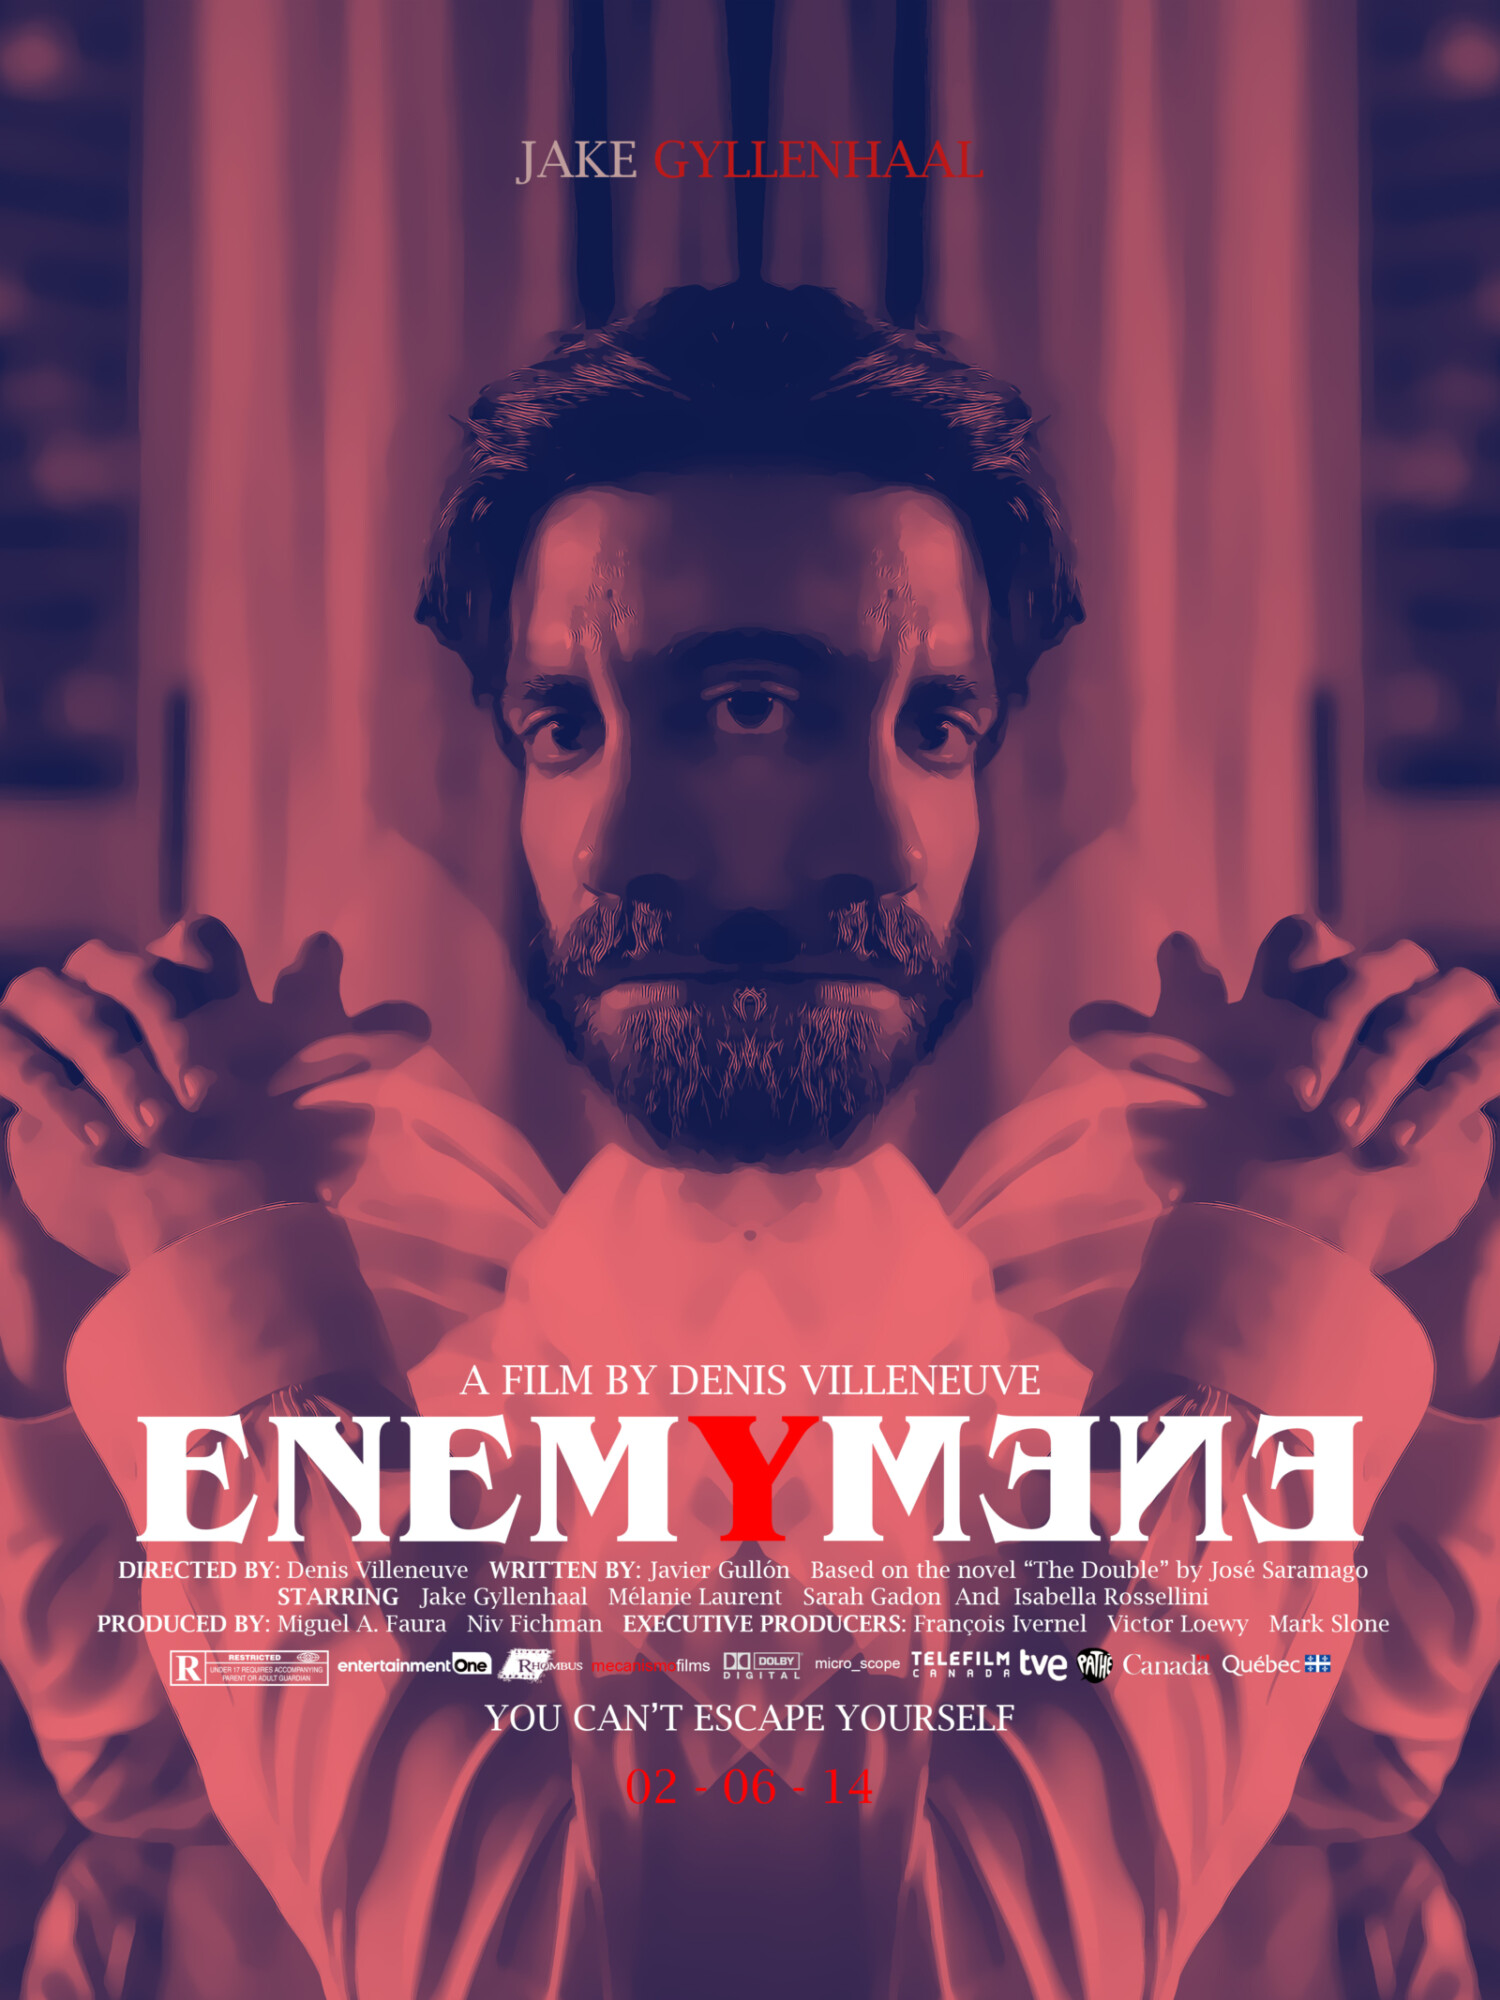 enemy film poster